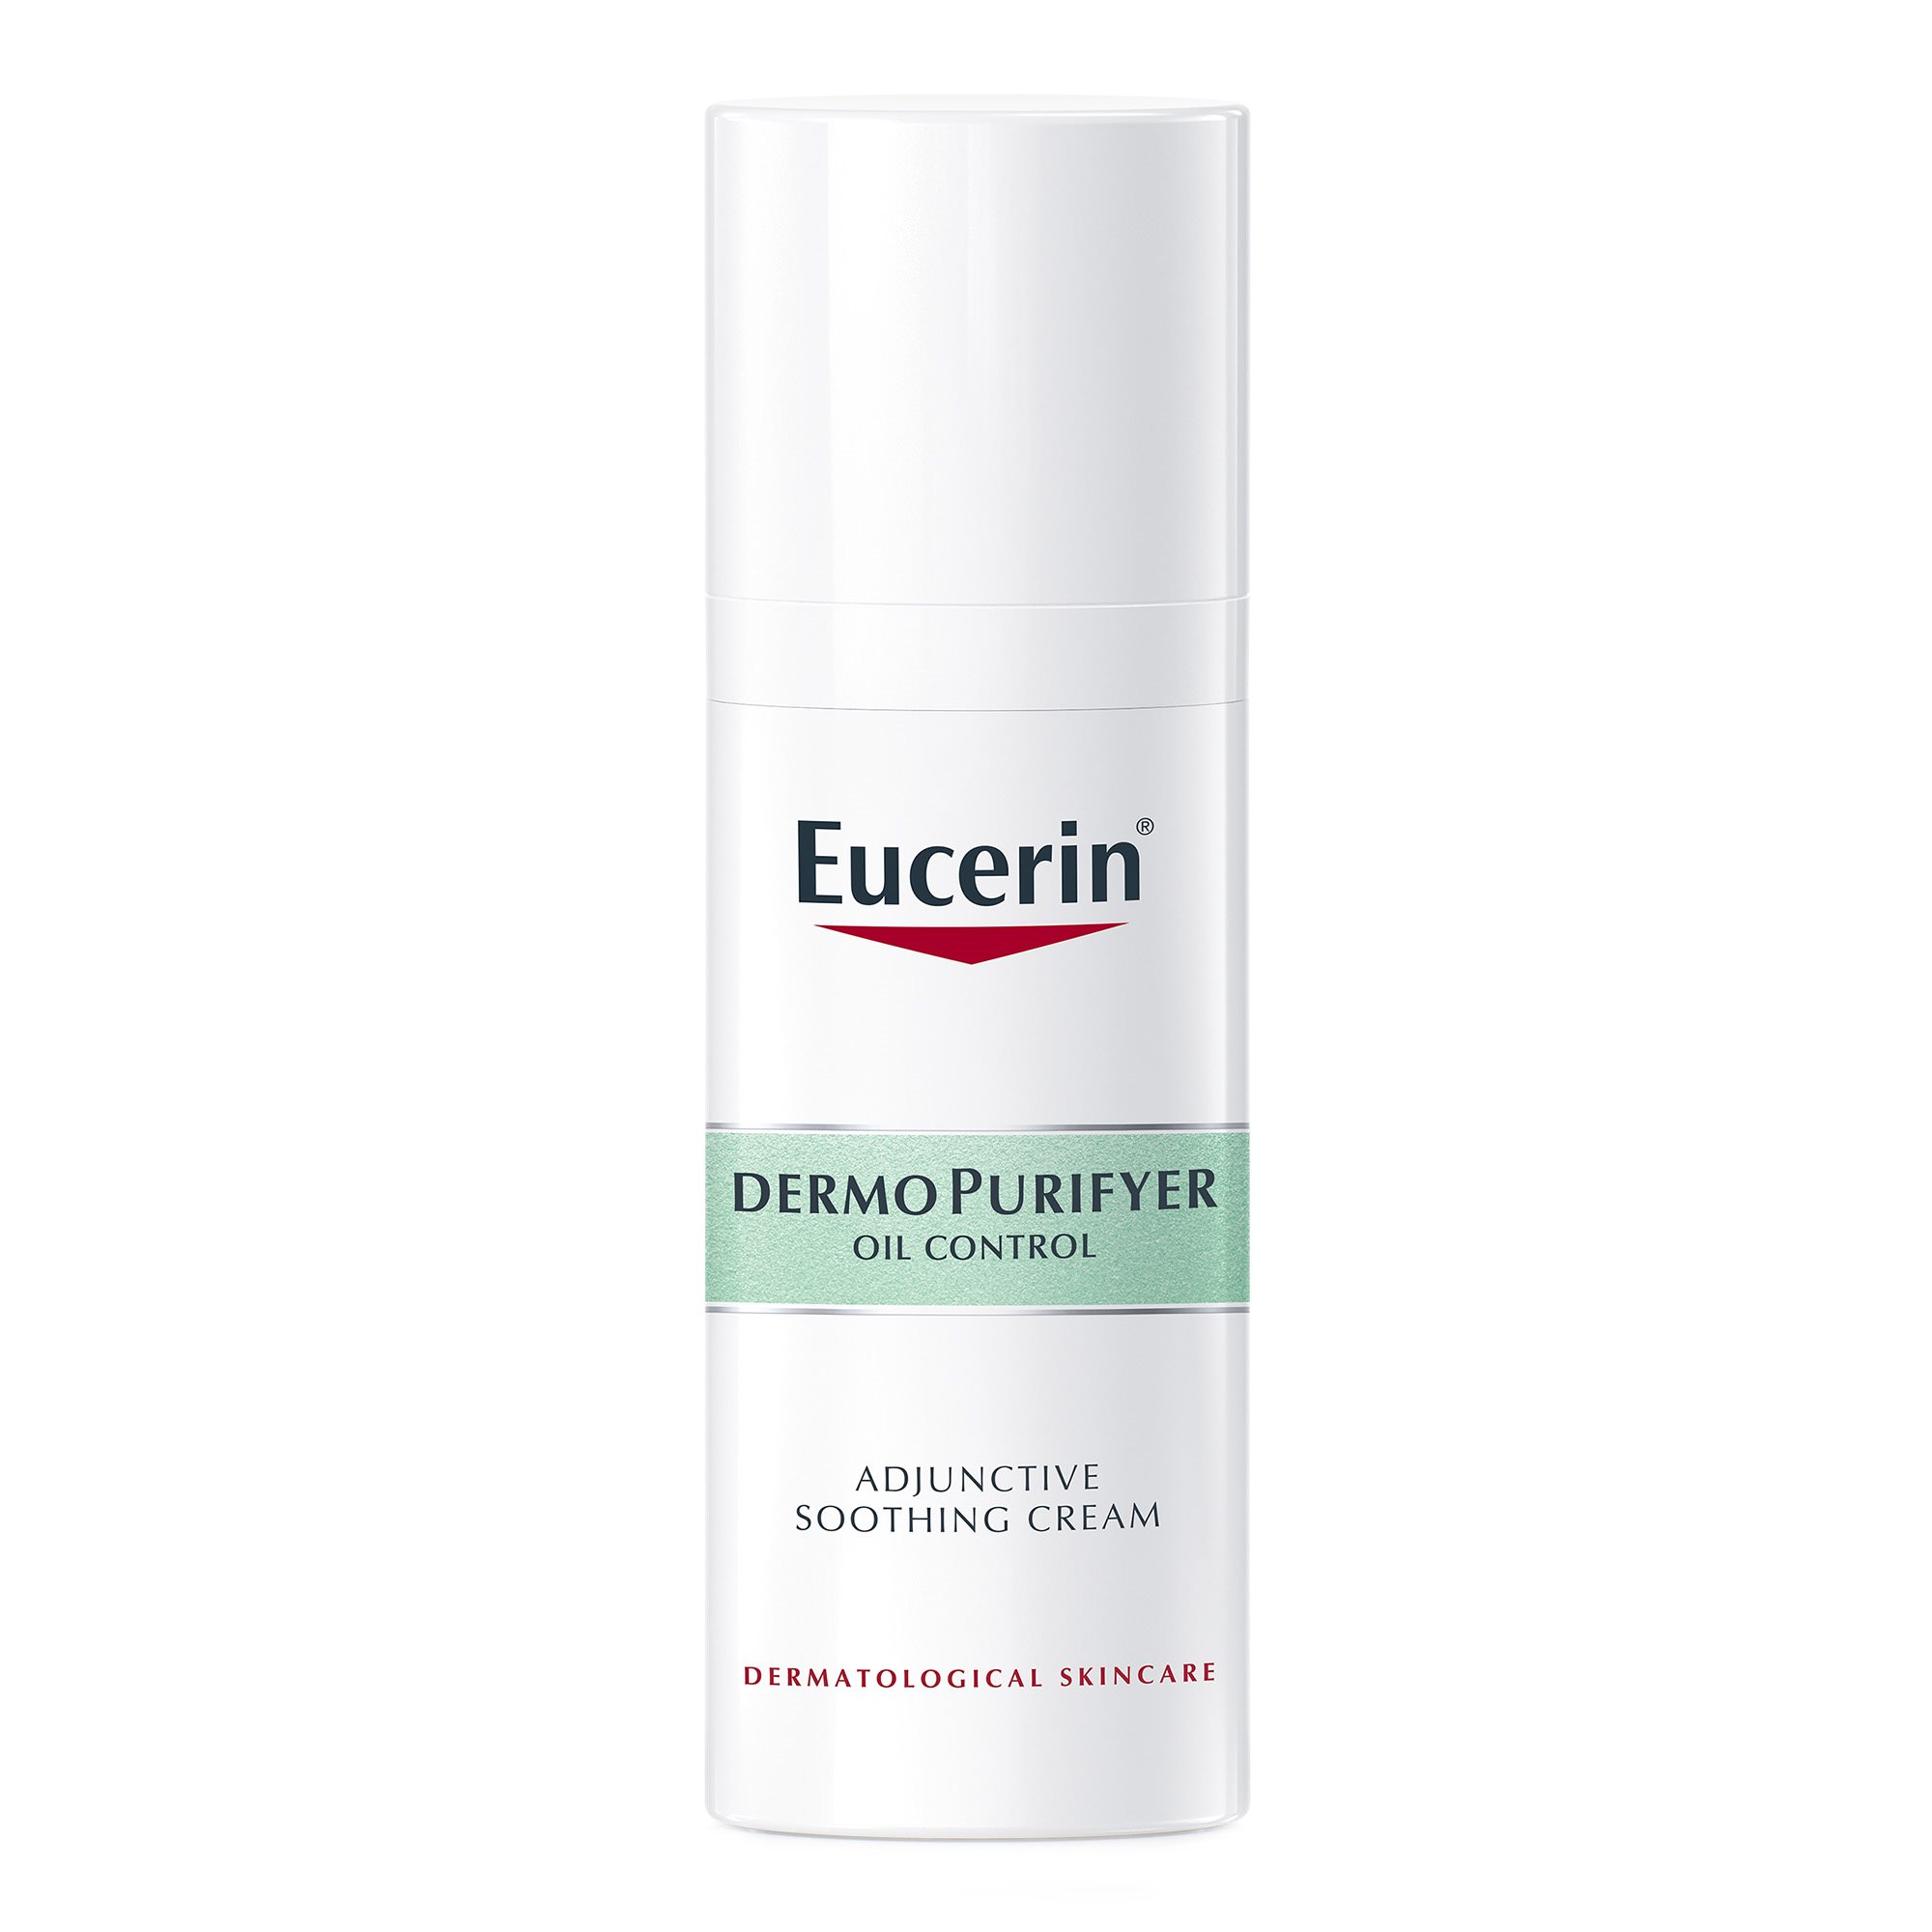 Eucerin DermoPurifyer Adjunctive Soothing Cream pack